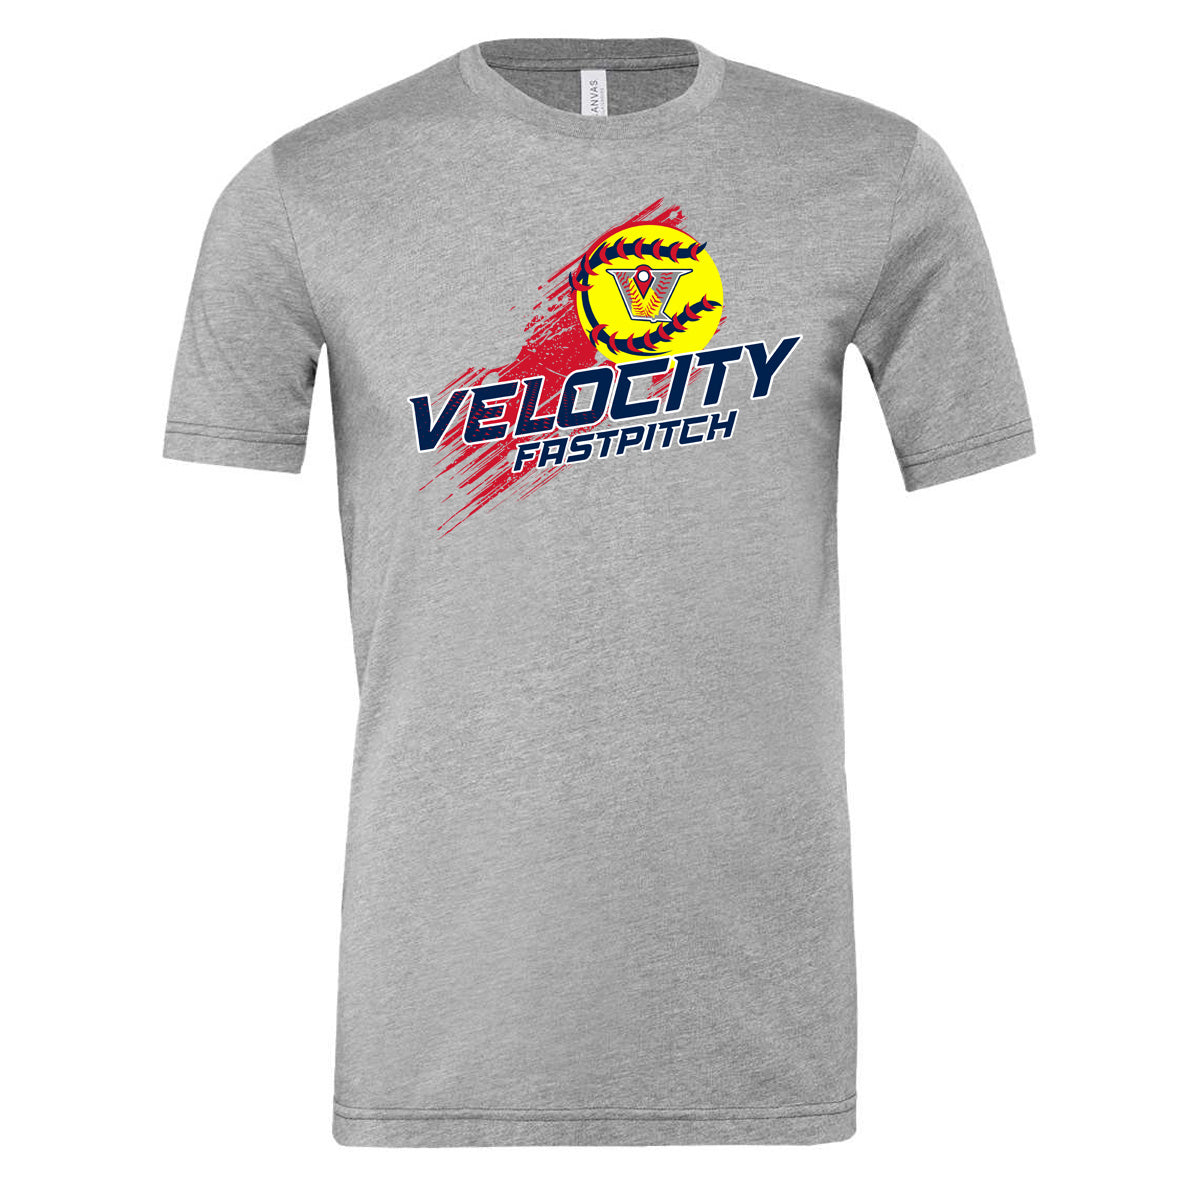 Velo FP - Velocity Fastpitch Streak - Athletic Heather (Tee/Hoodie/Sweatshirt) - Southern Grace Creations